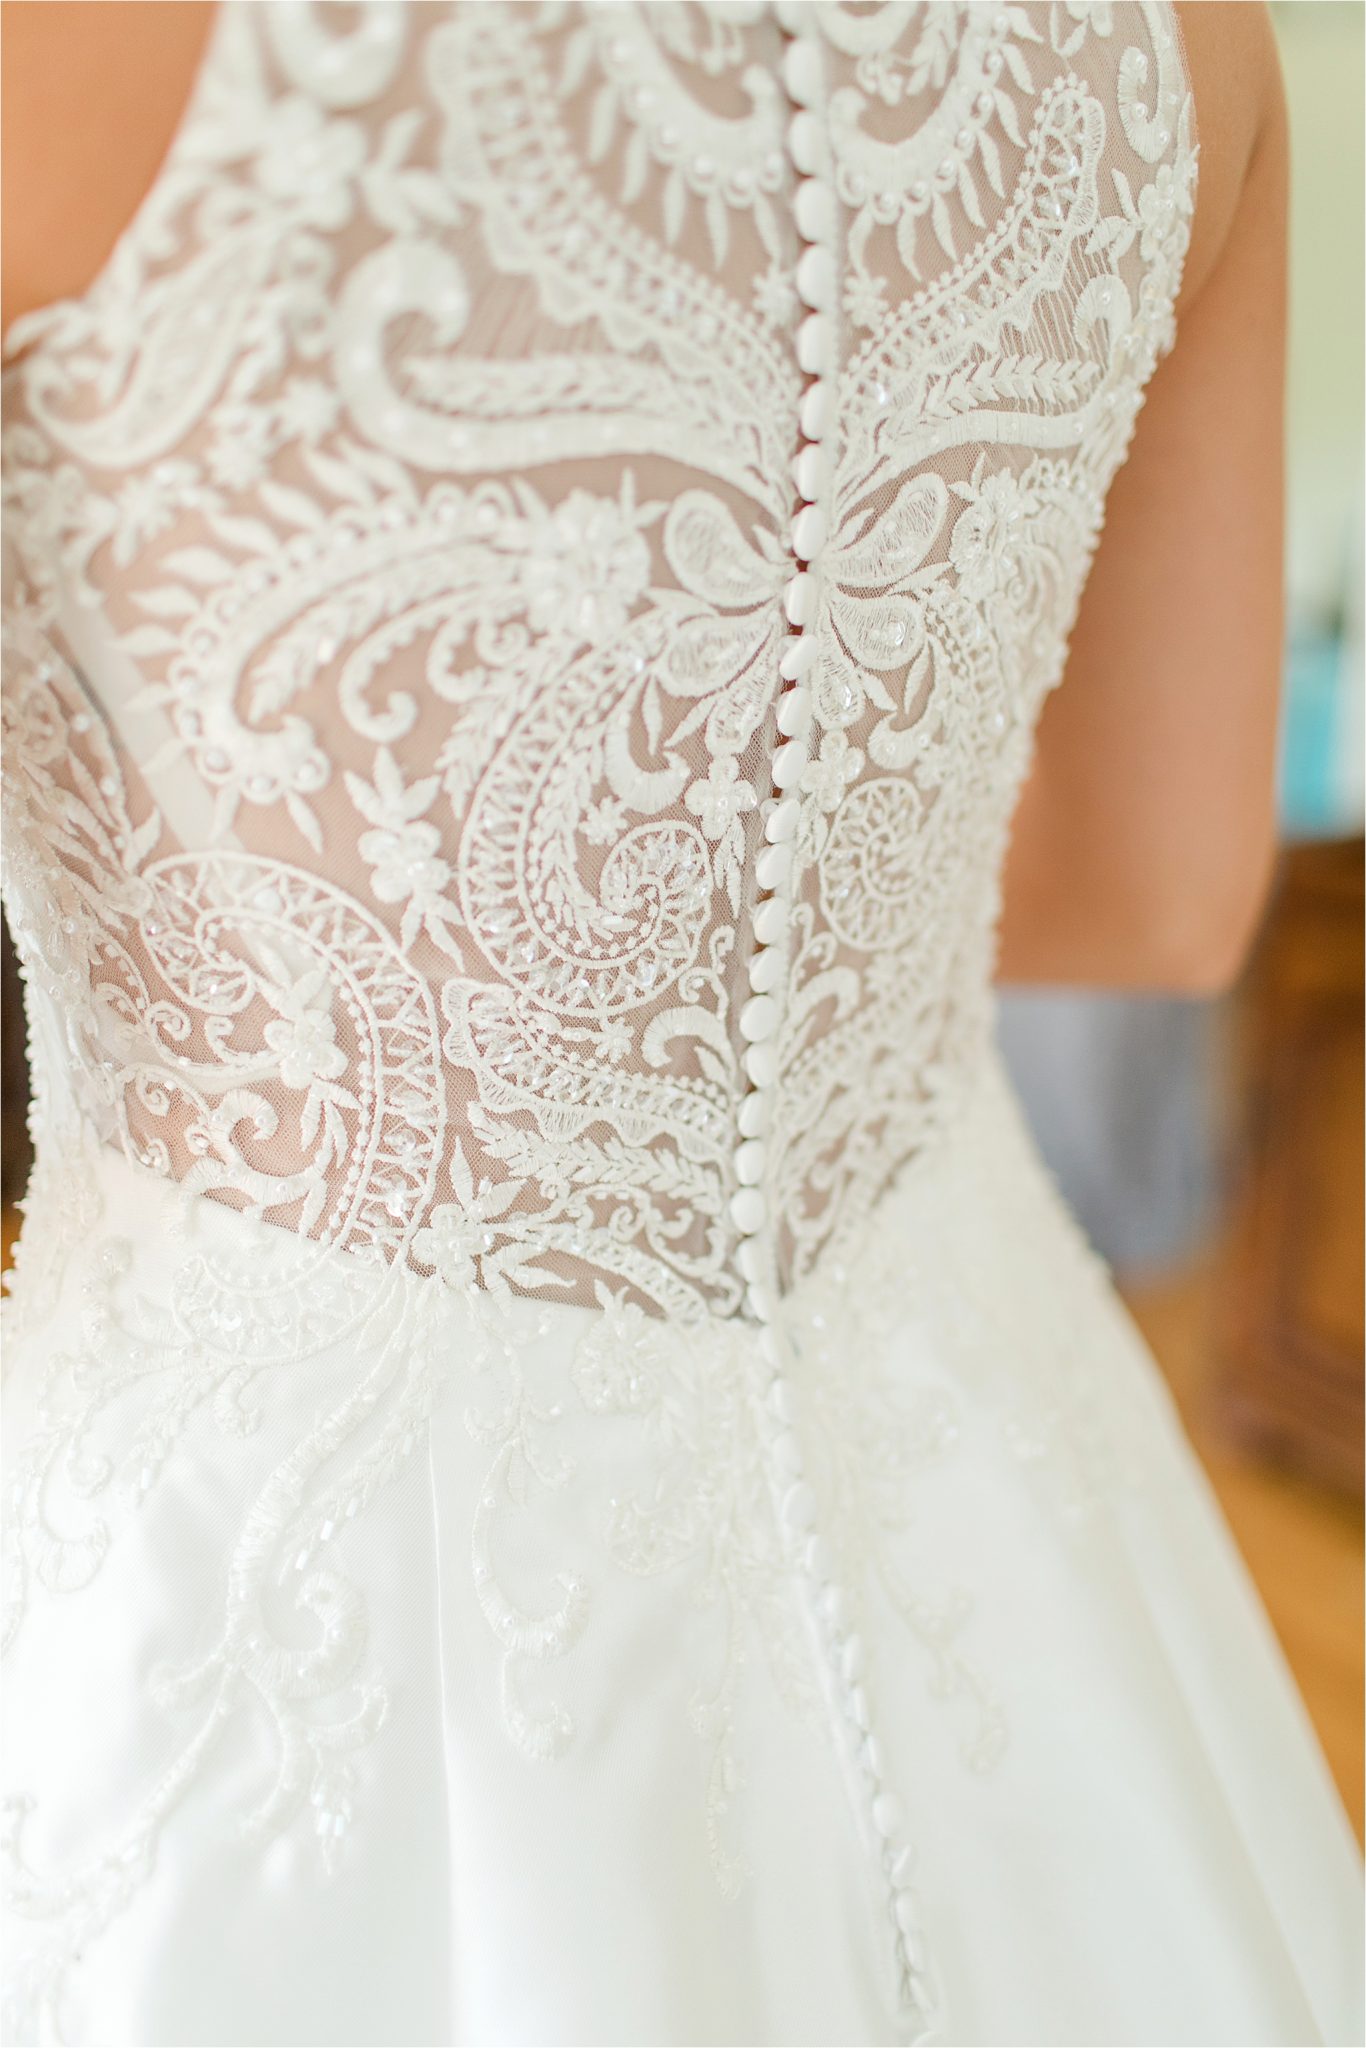 Sonnet House, Birmingham Alabama Wedding Photographer, Wedding dress details